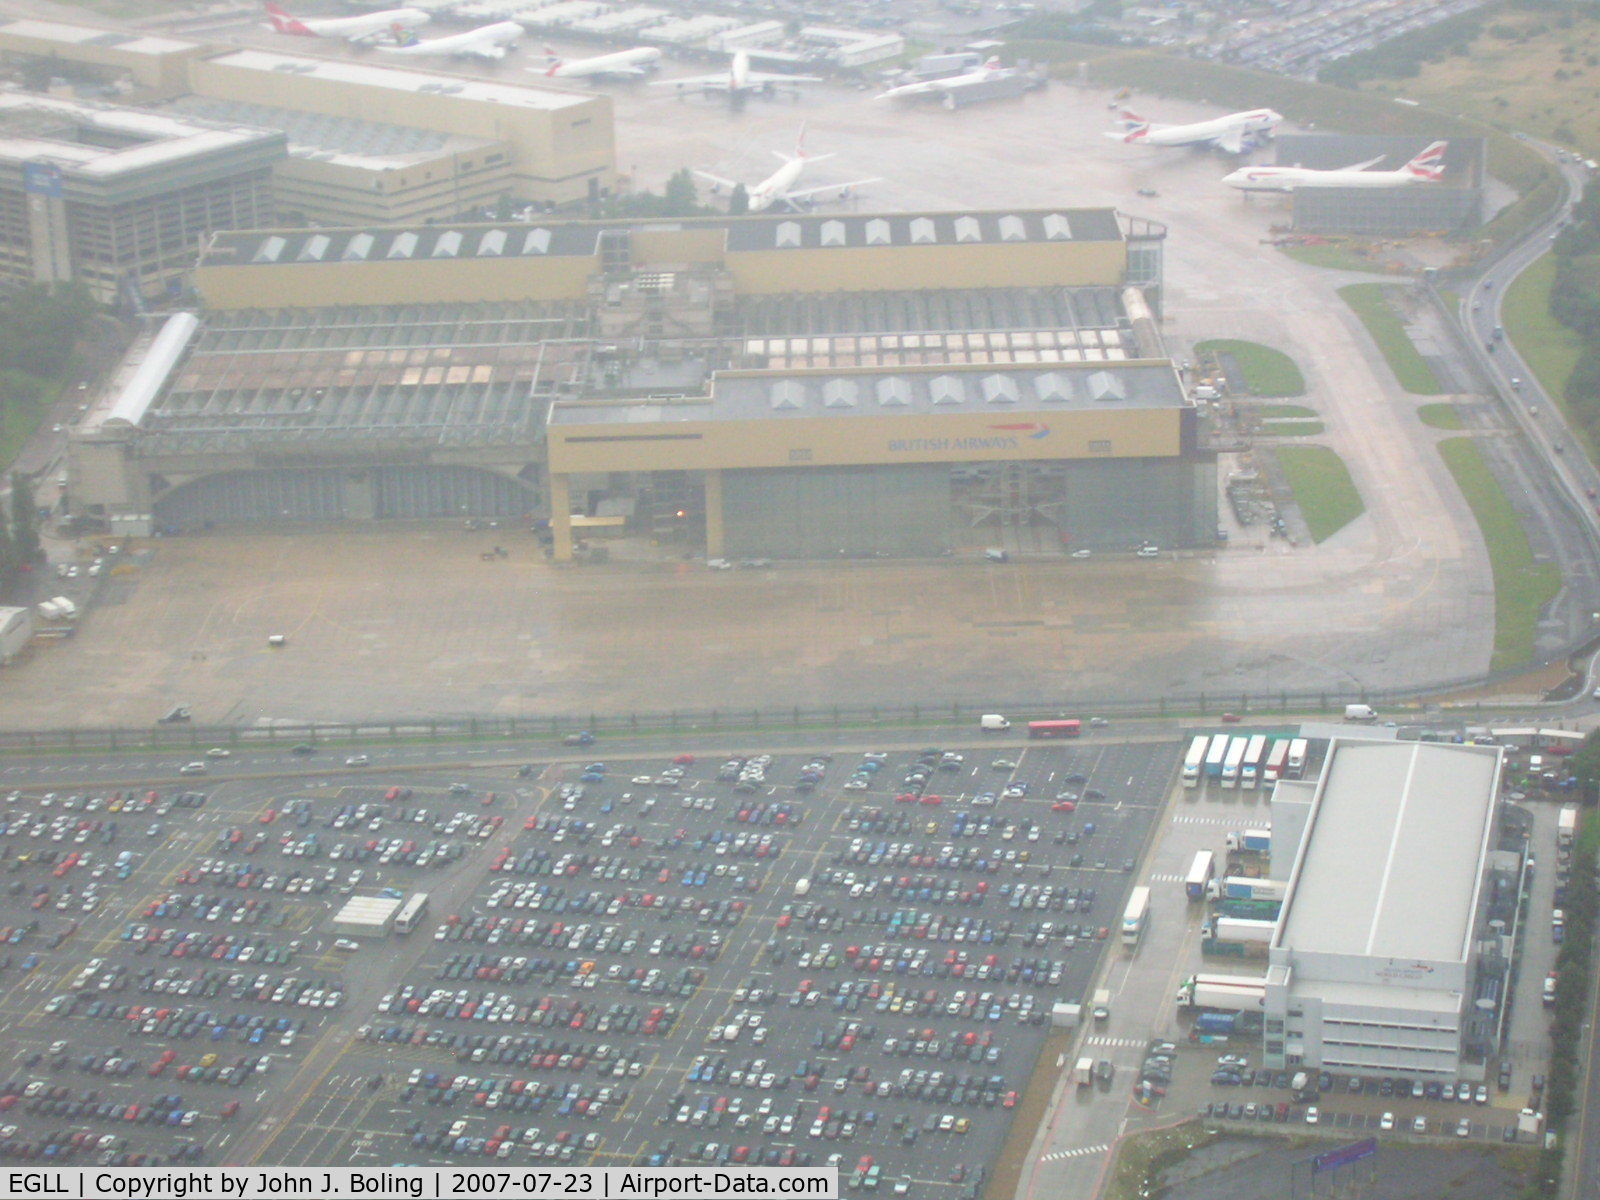 London Heathrow Airport, London, England United Kingdom (EGLL) - British Airways Maintenance Hangar at Heathrow